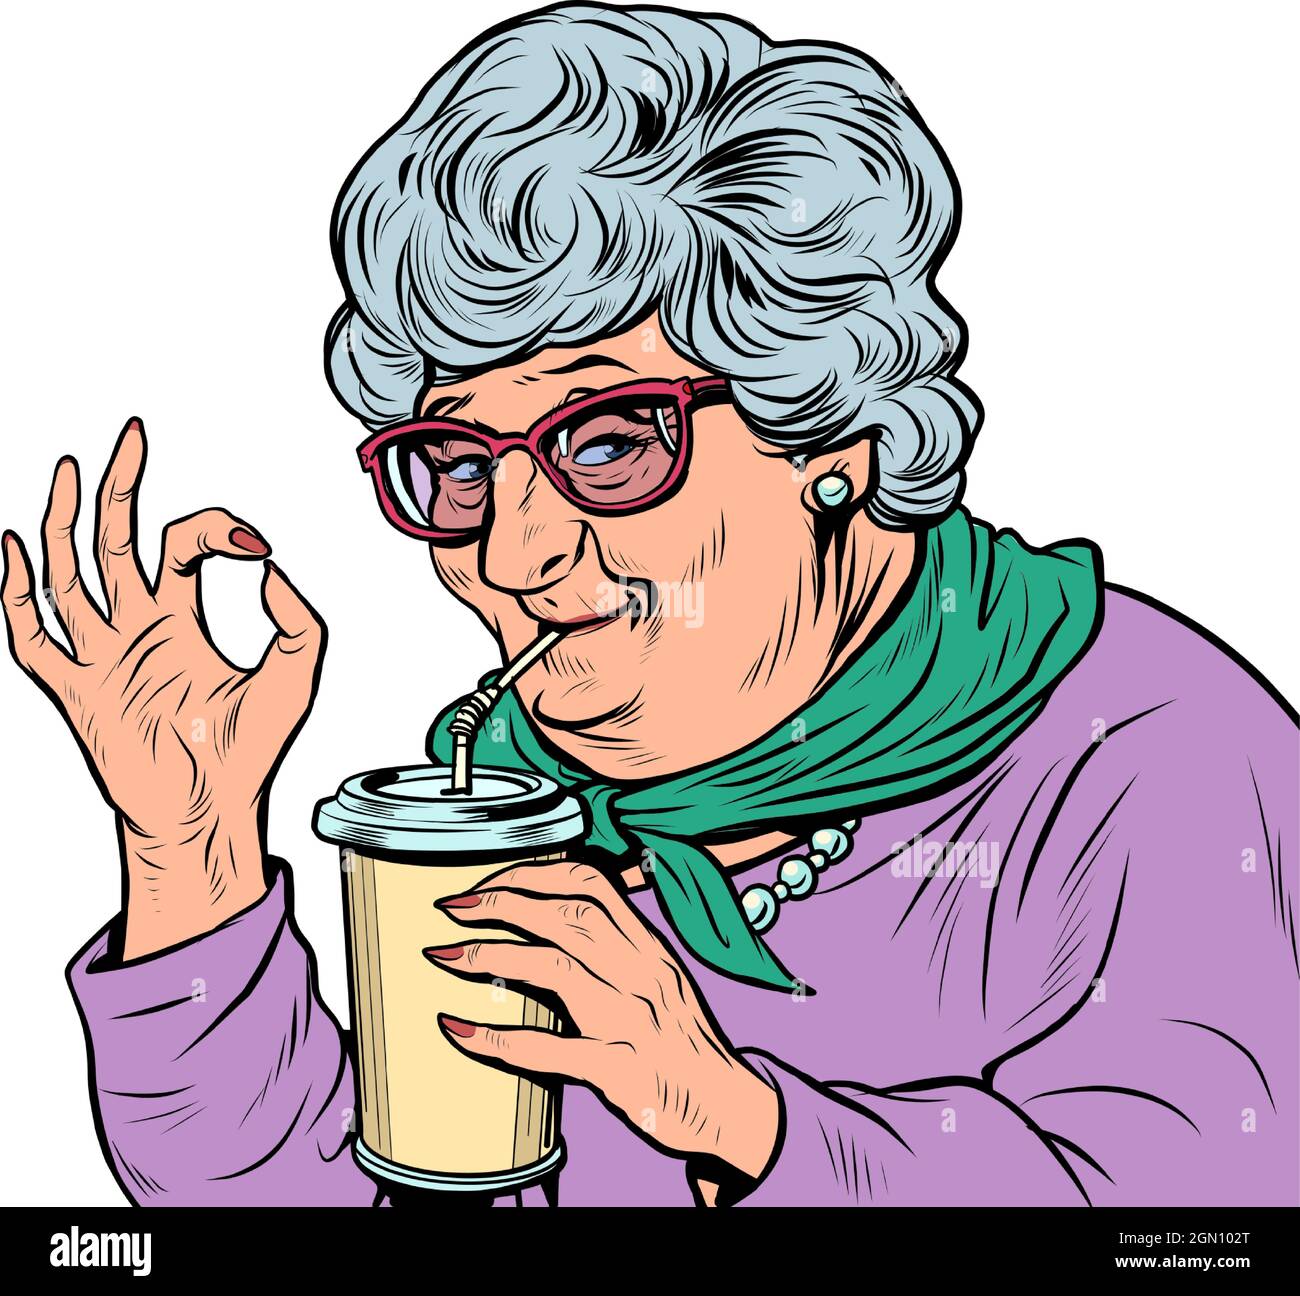 Mature Granny Drink